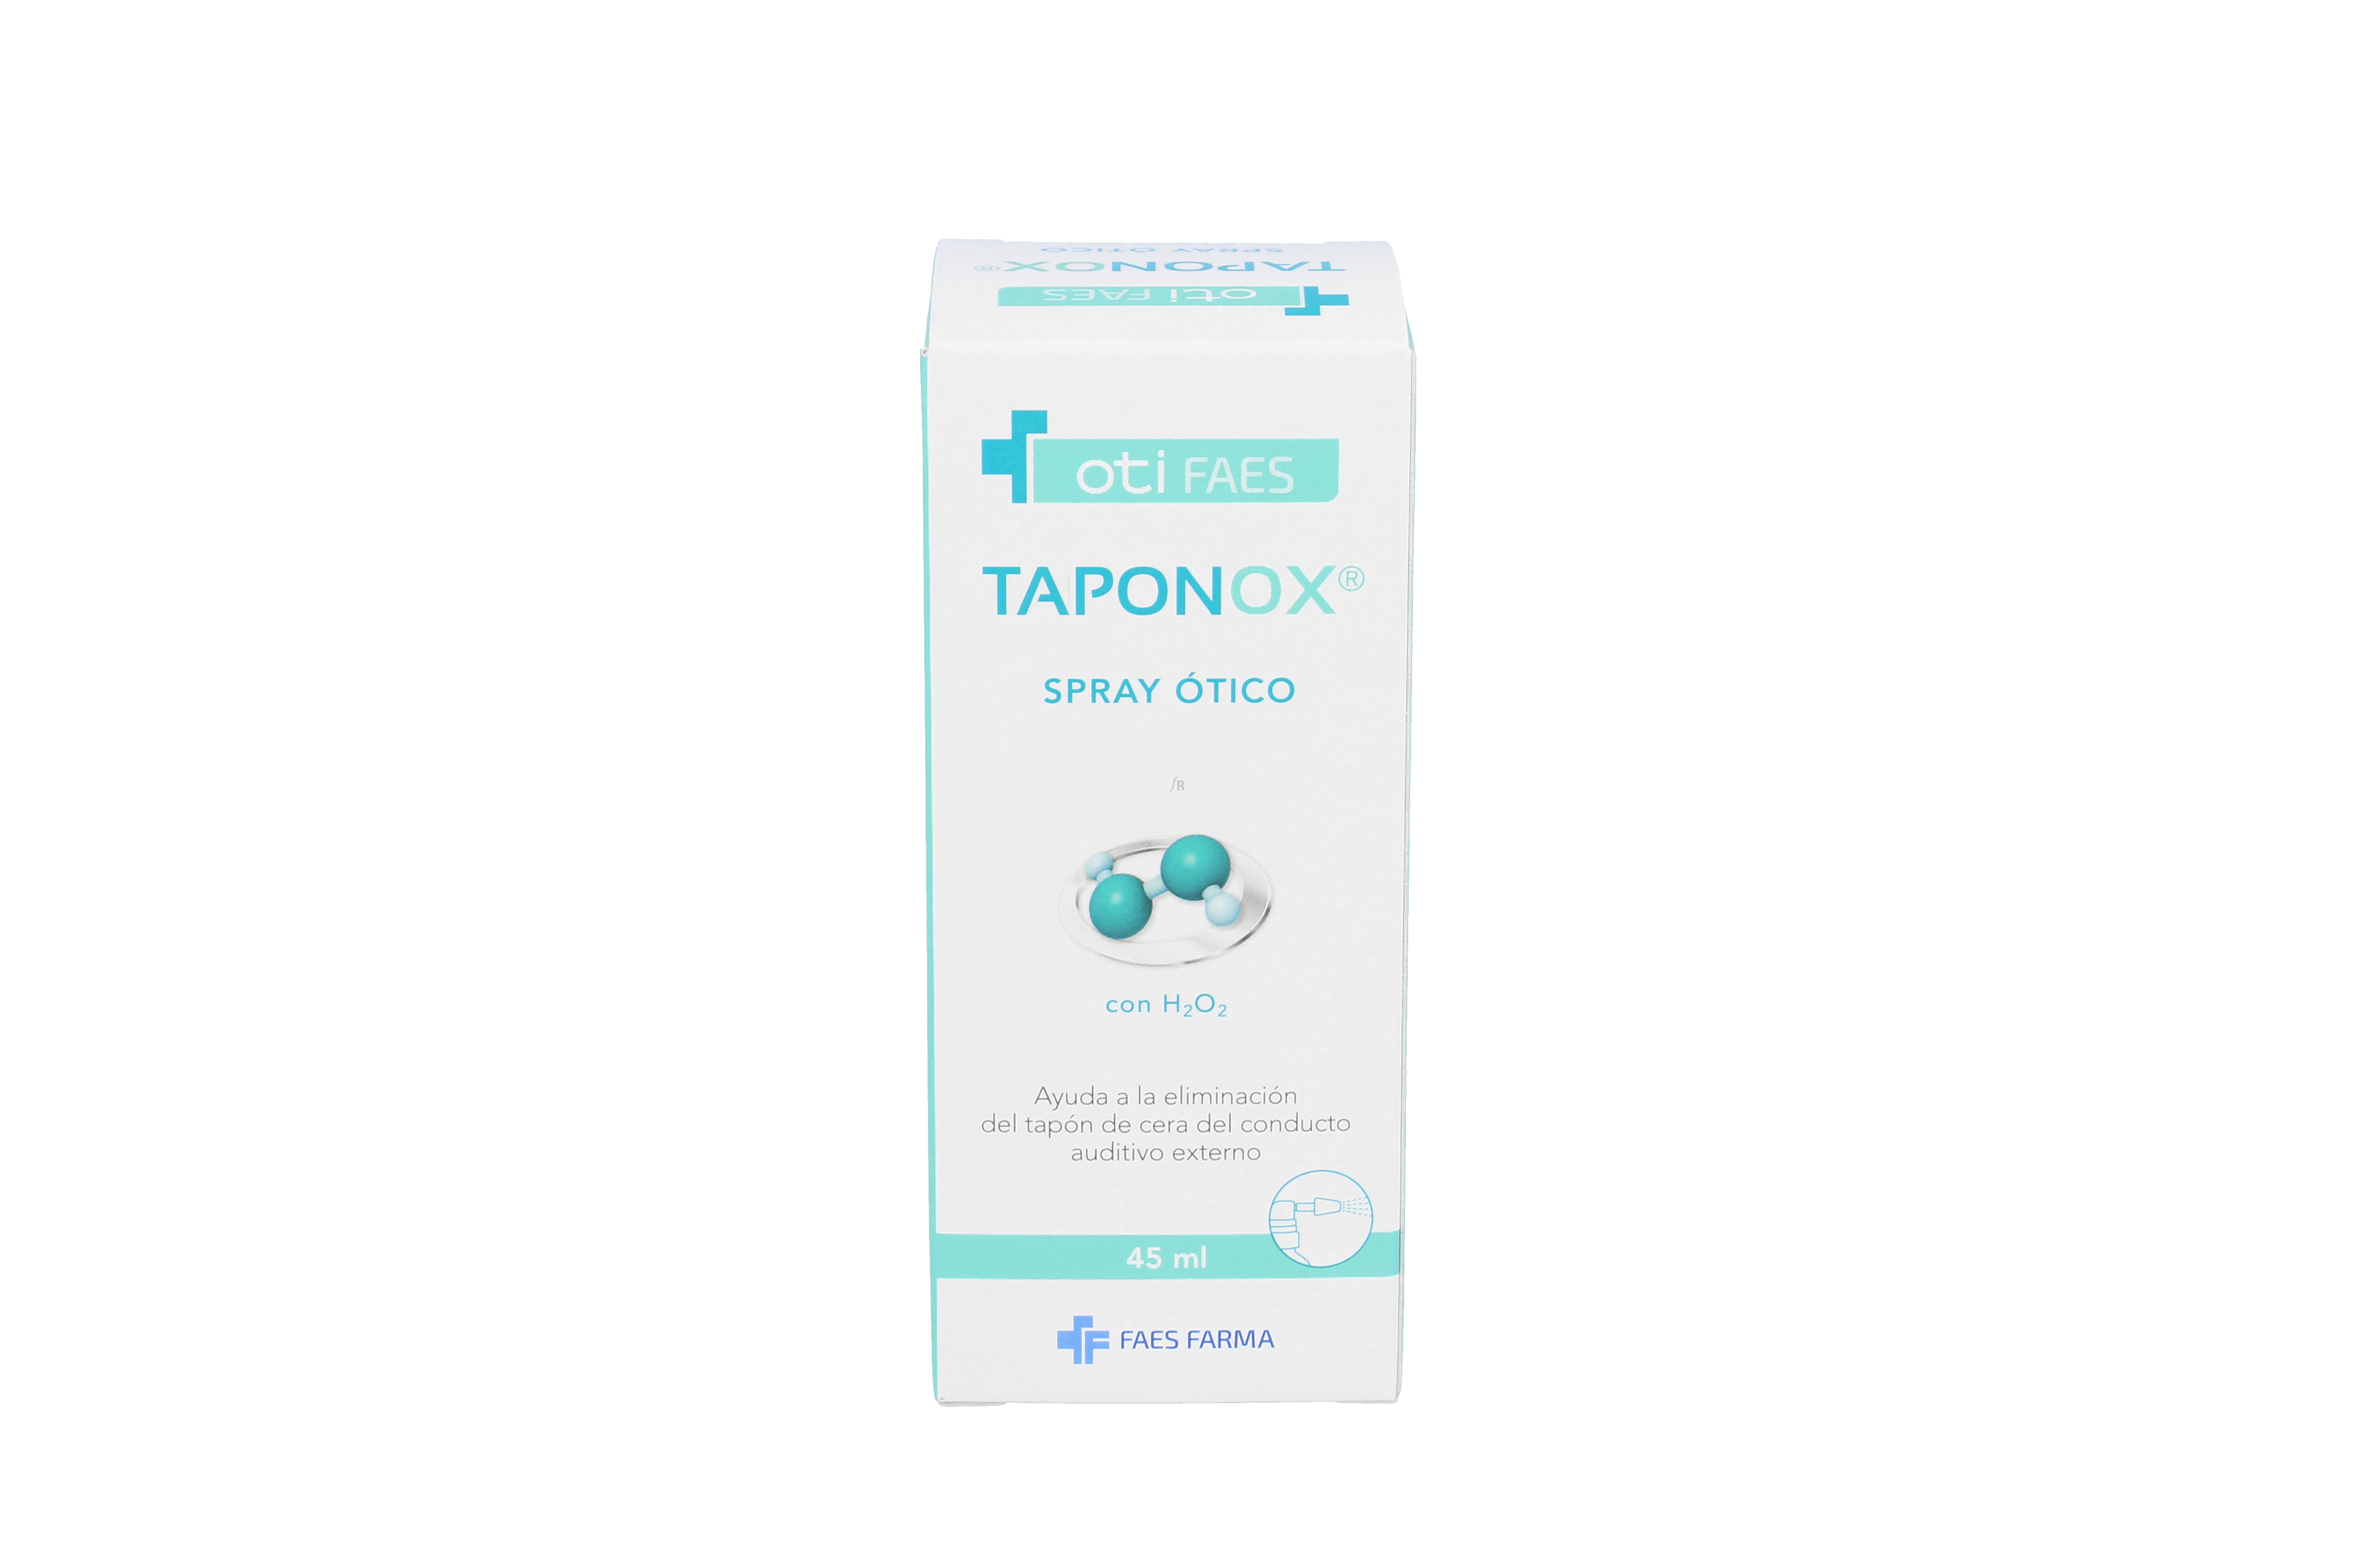 Otifaes Taponox Spray Otico 45 Ml